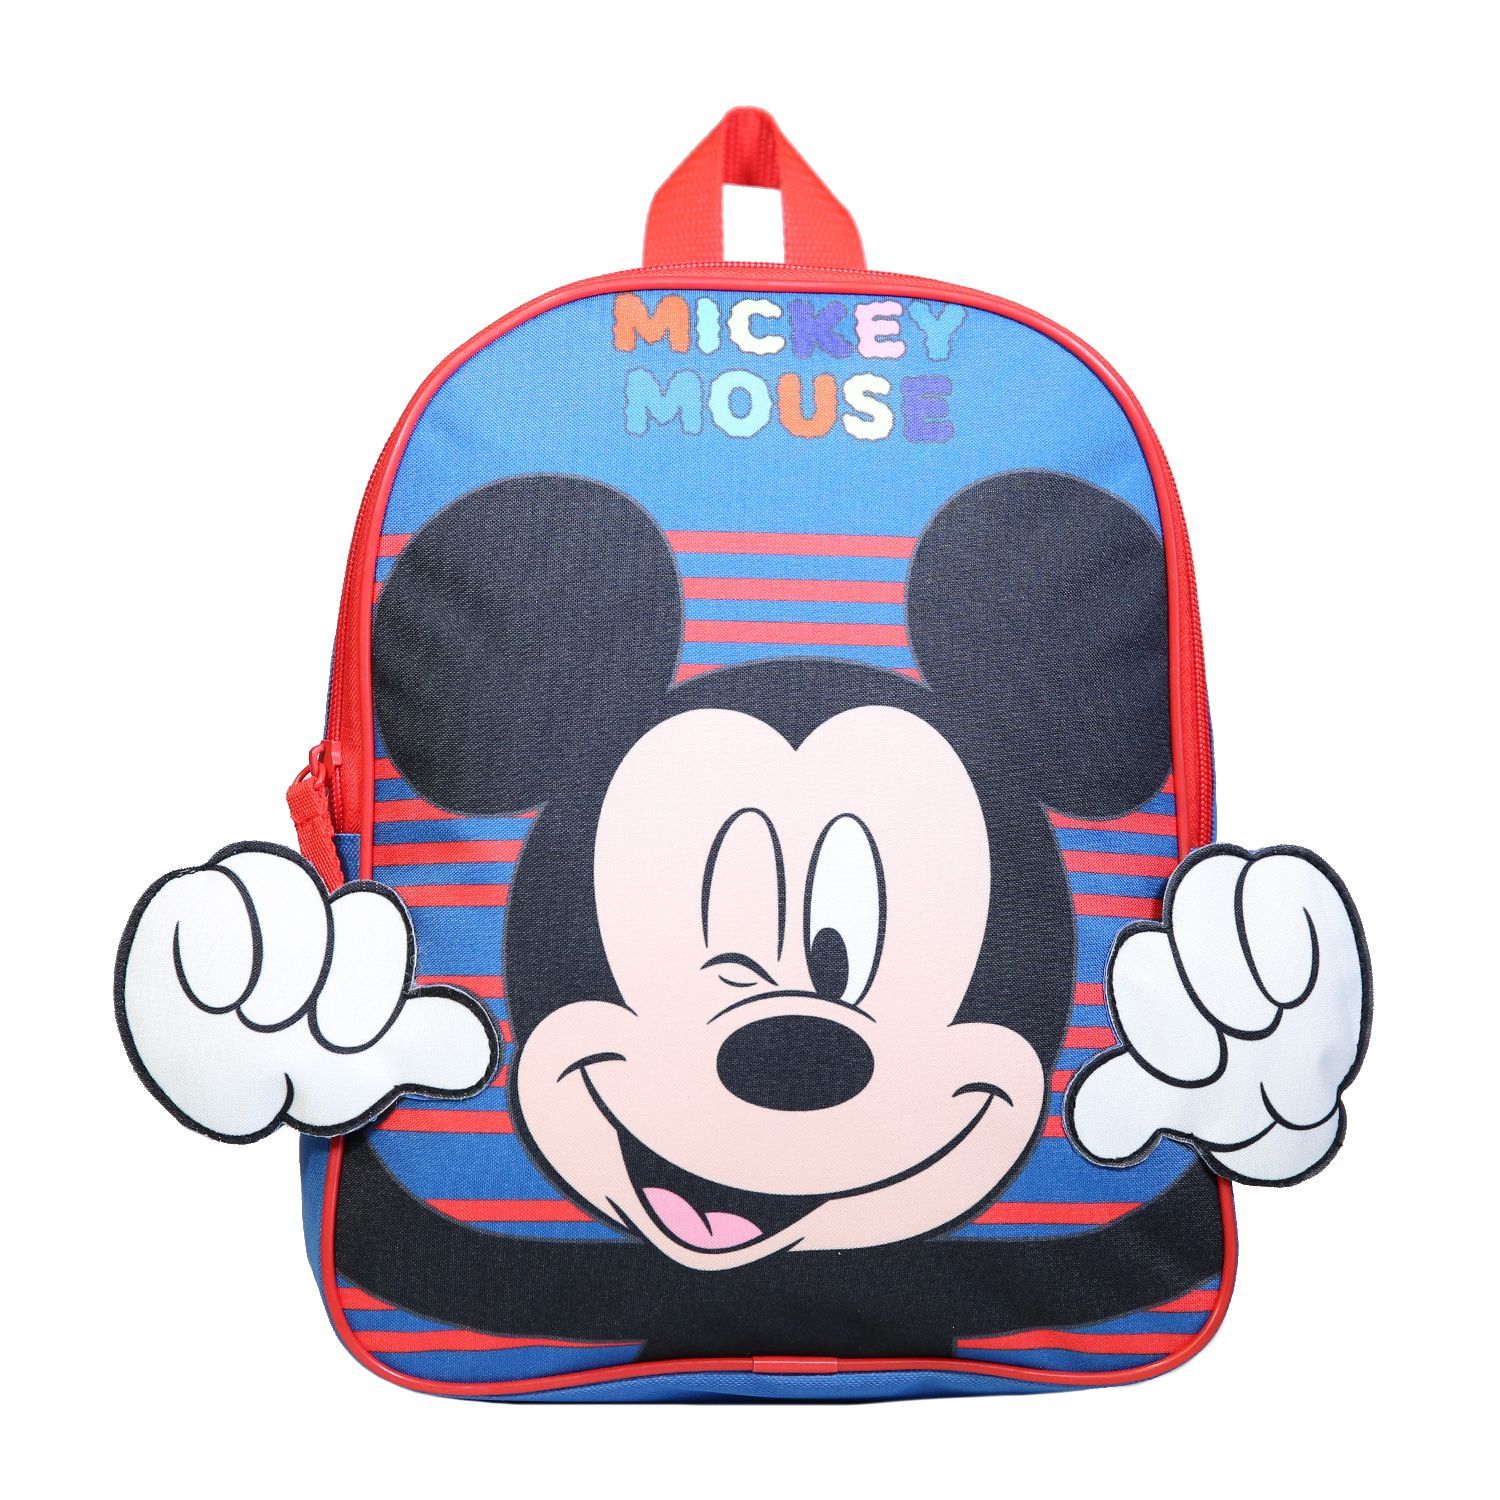 Sac à dos maternelle Disney personnalisé - Mickey bleu